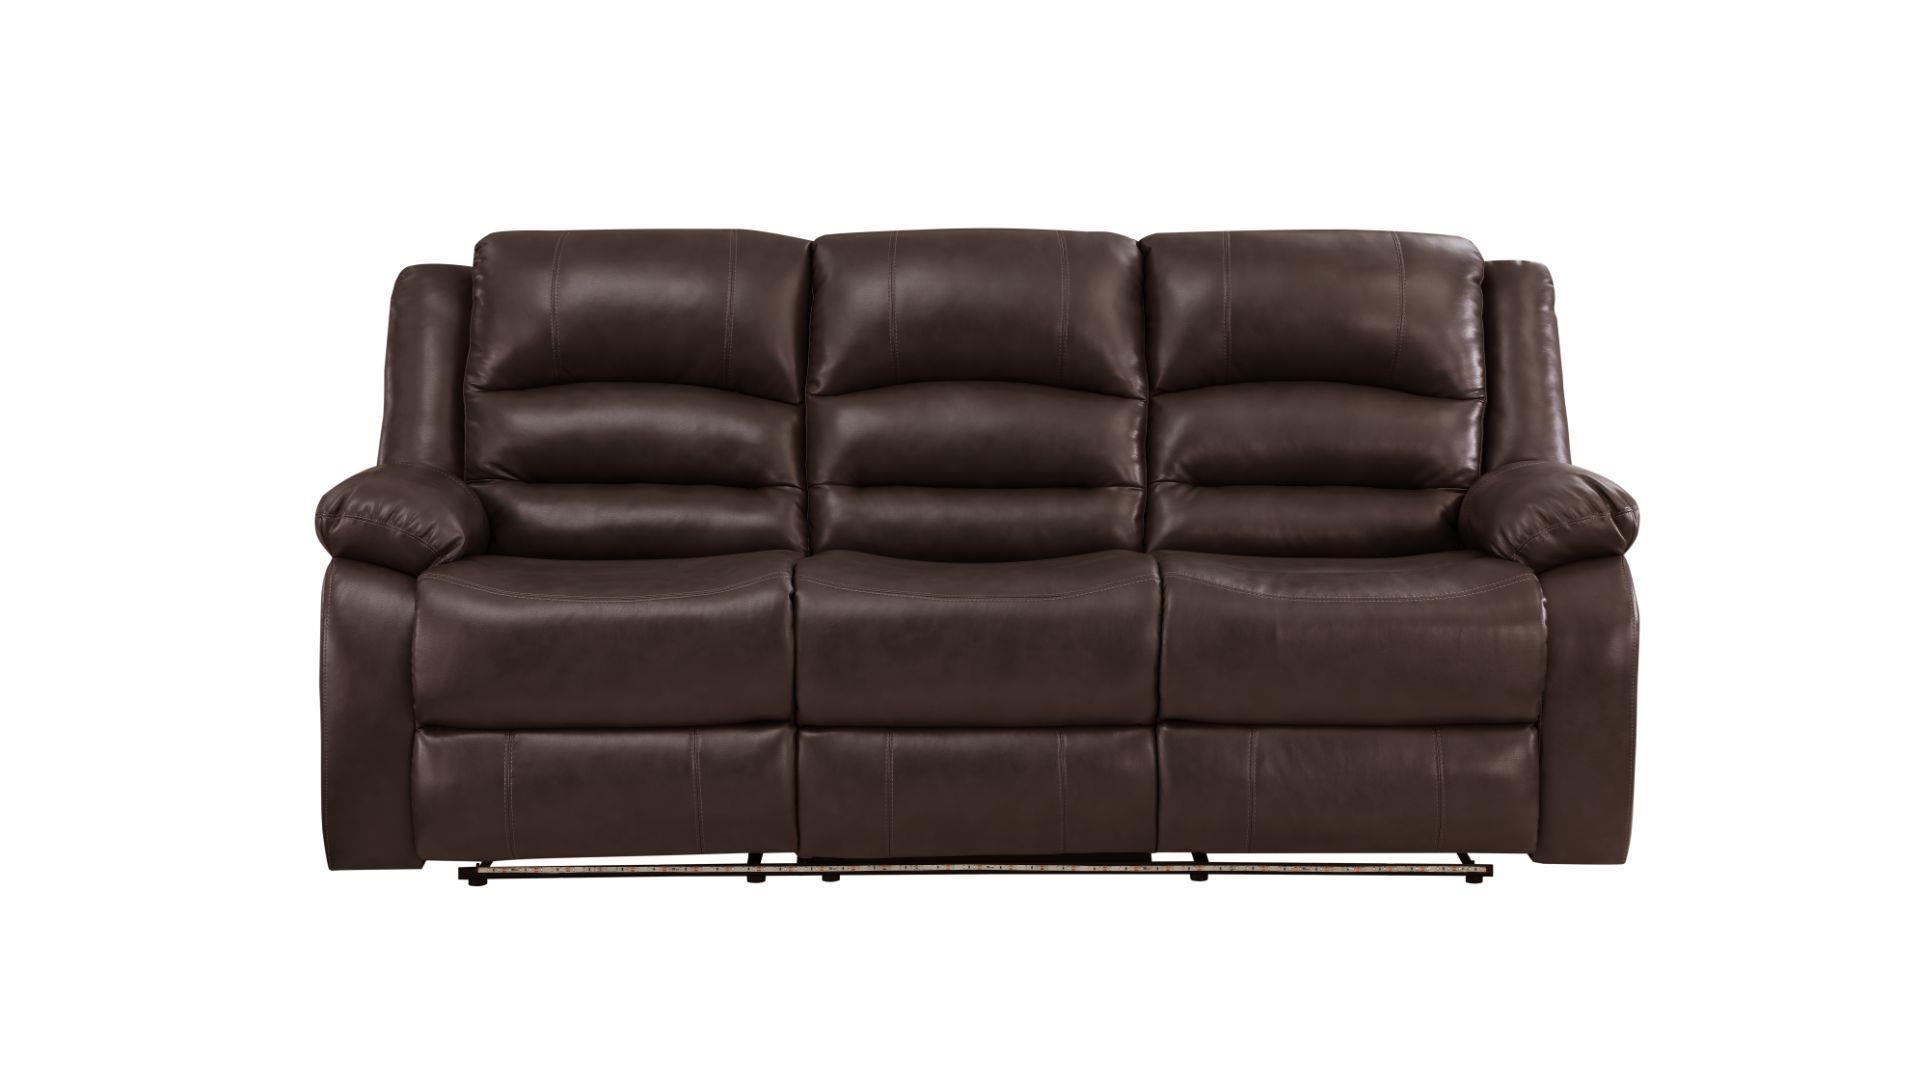 Galaxy Home Furniture MARTIN BR Recliner Sofa